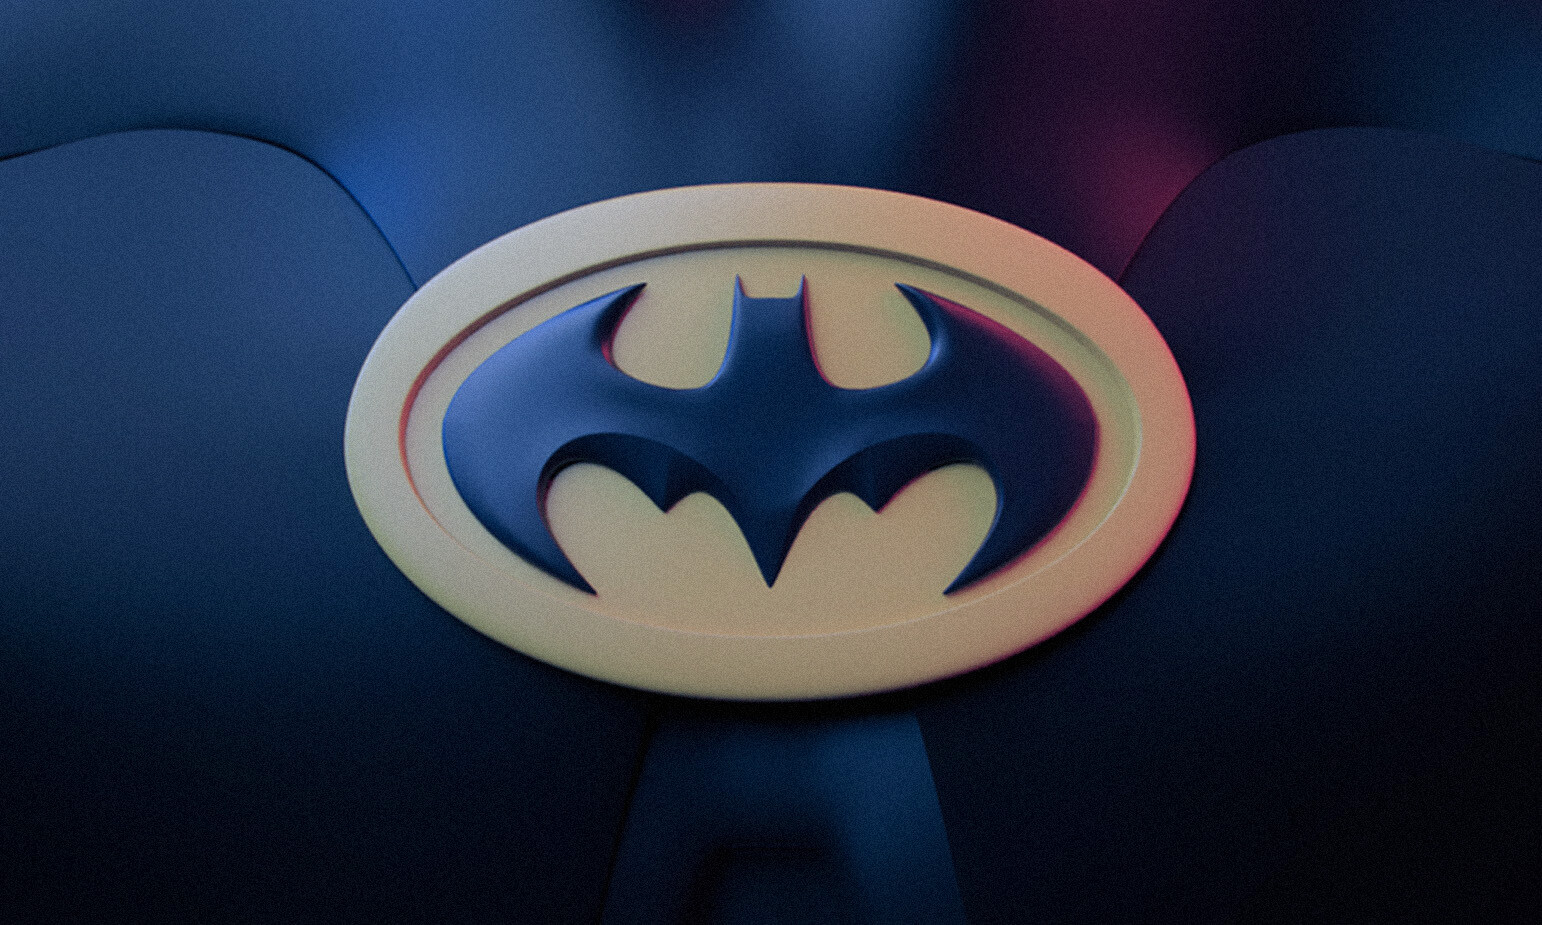 ArtStation - Batman Returns Movie Poster Recreation